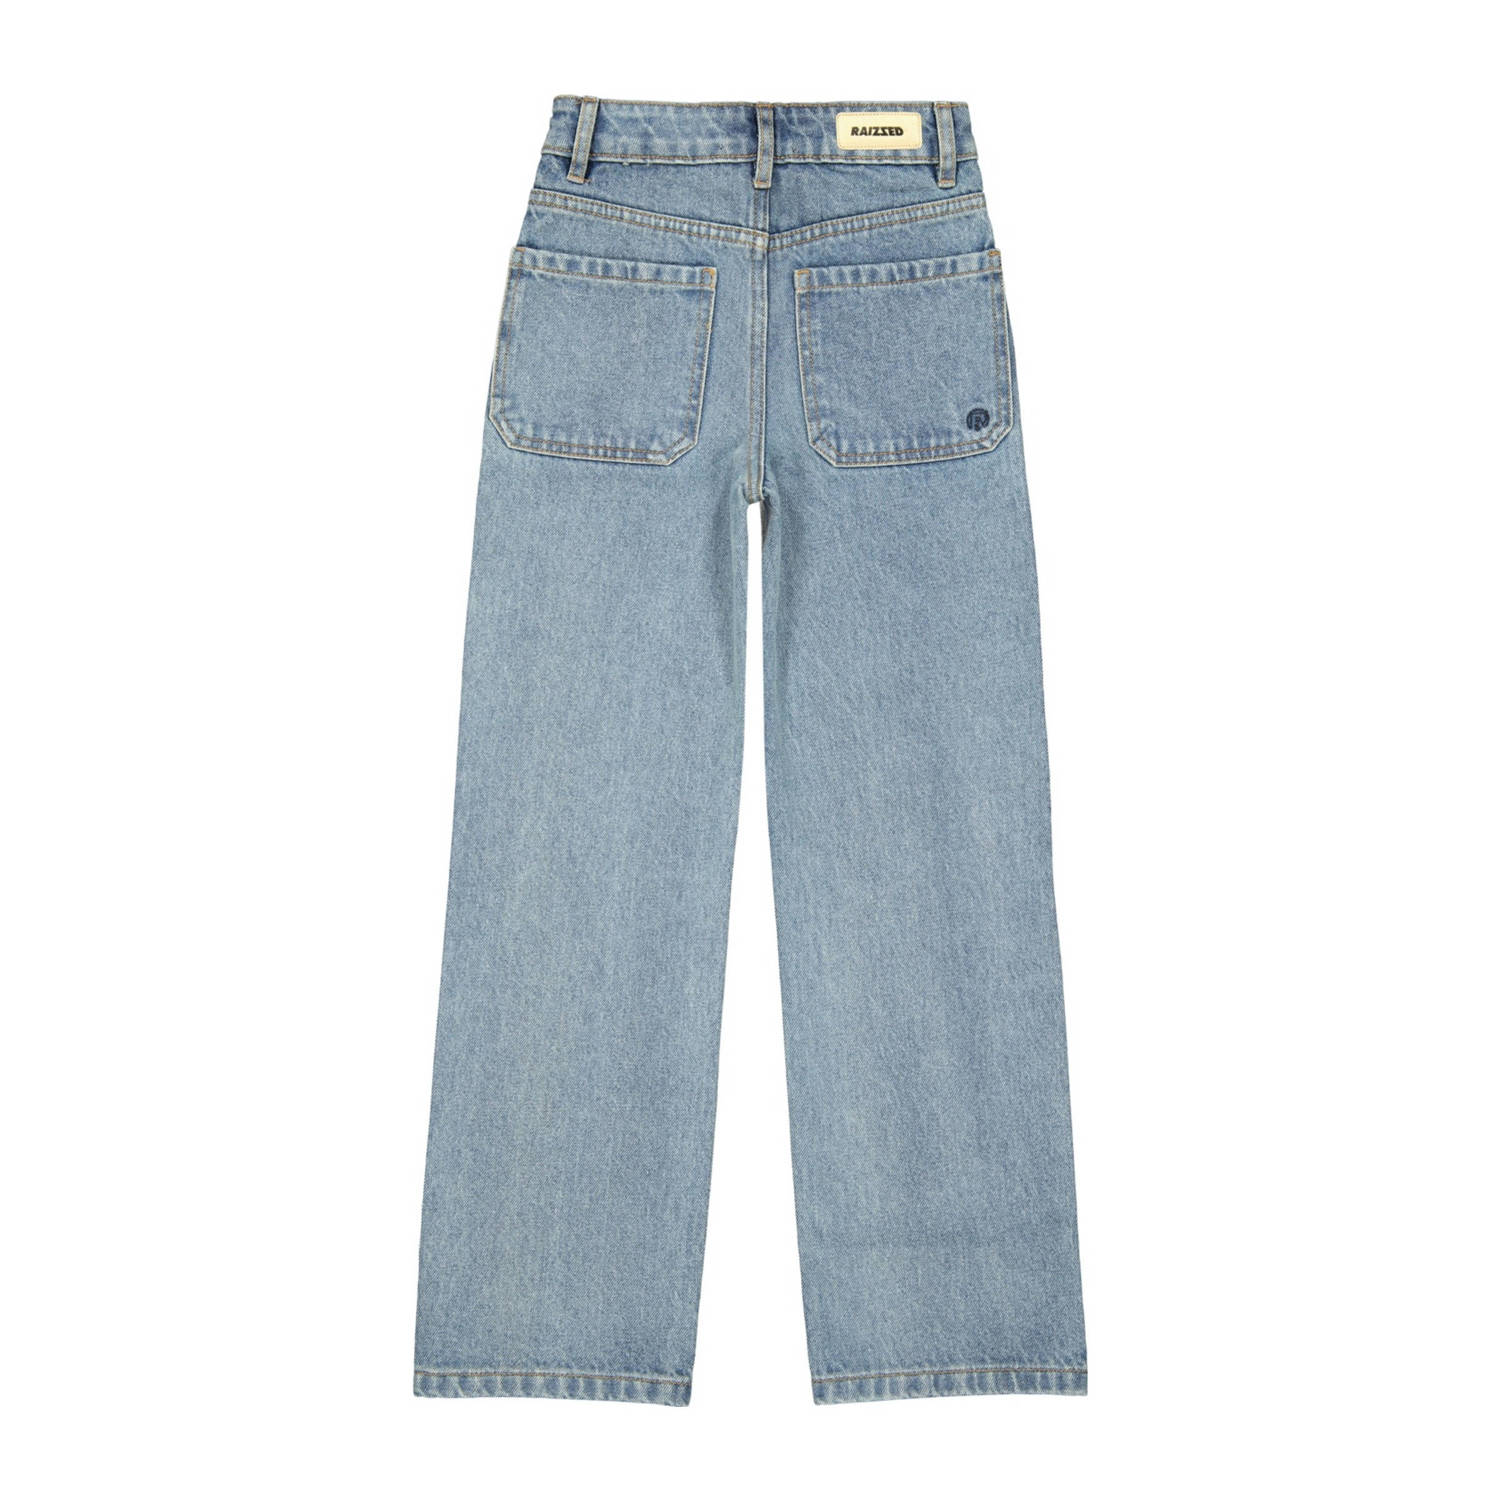 Raizzed high waist loose fit jeans Mississippi worker vintage blue